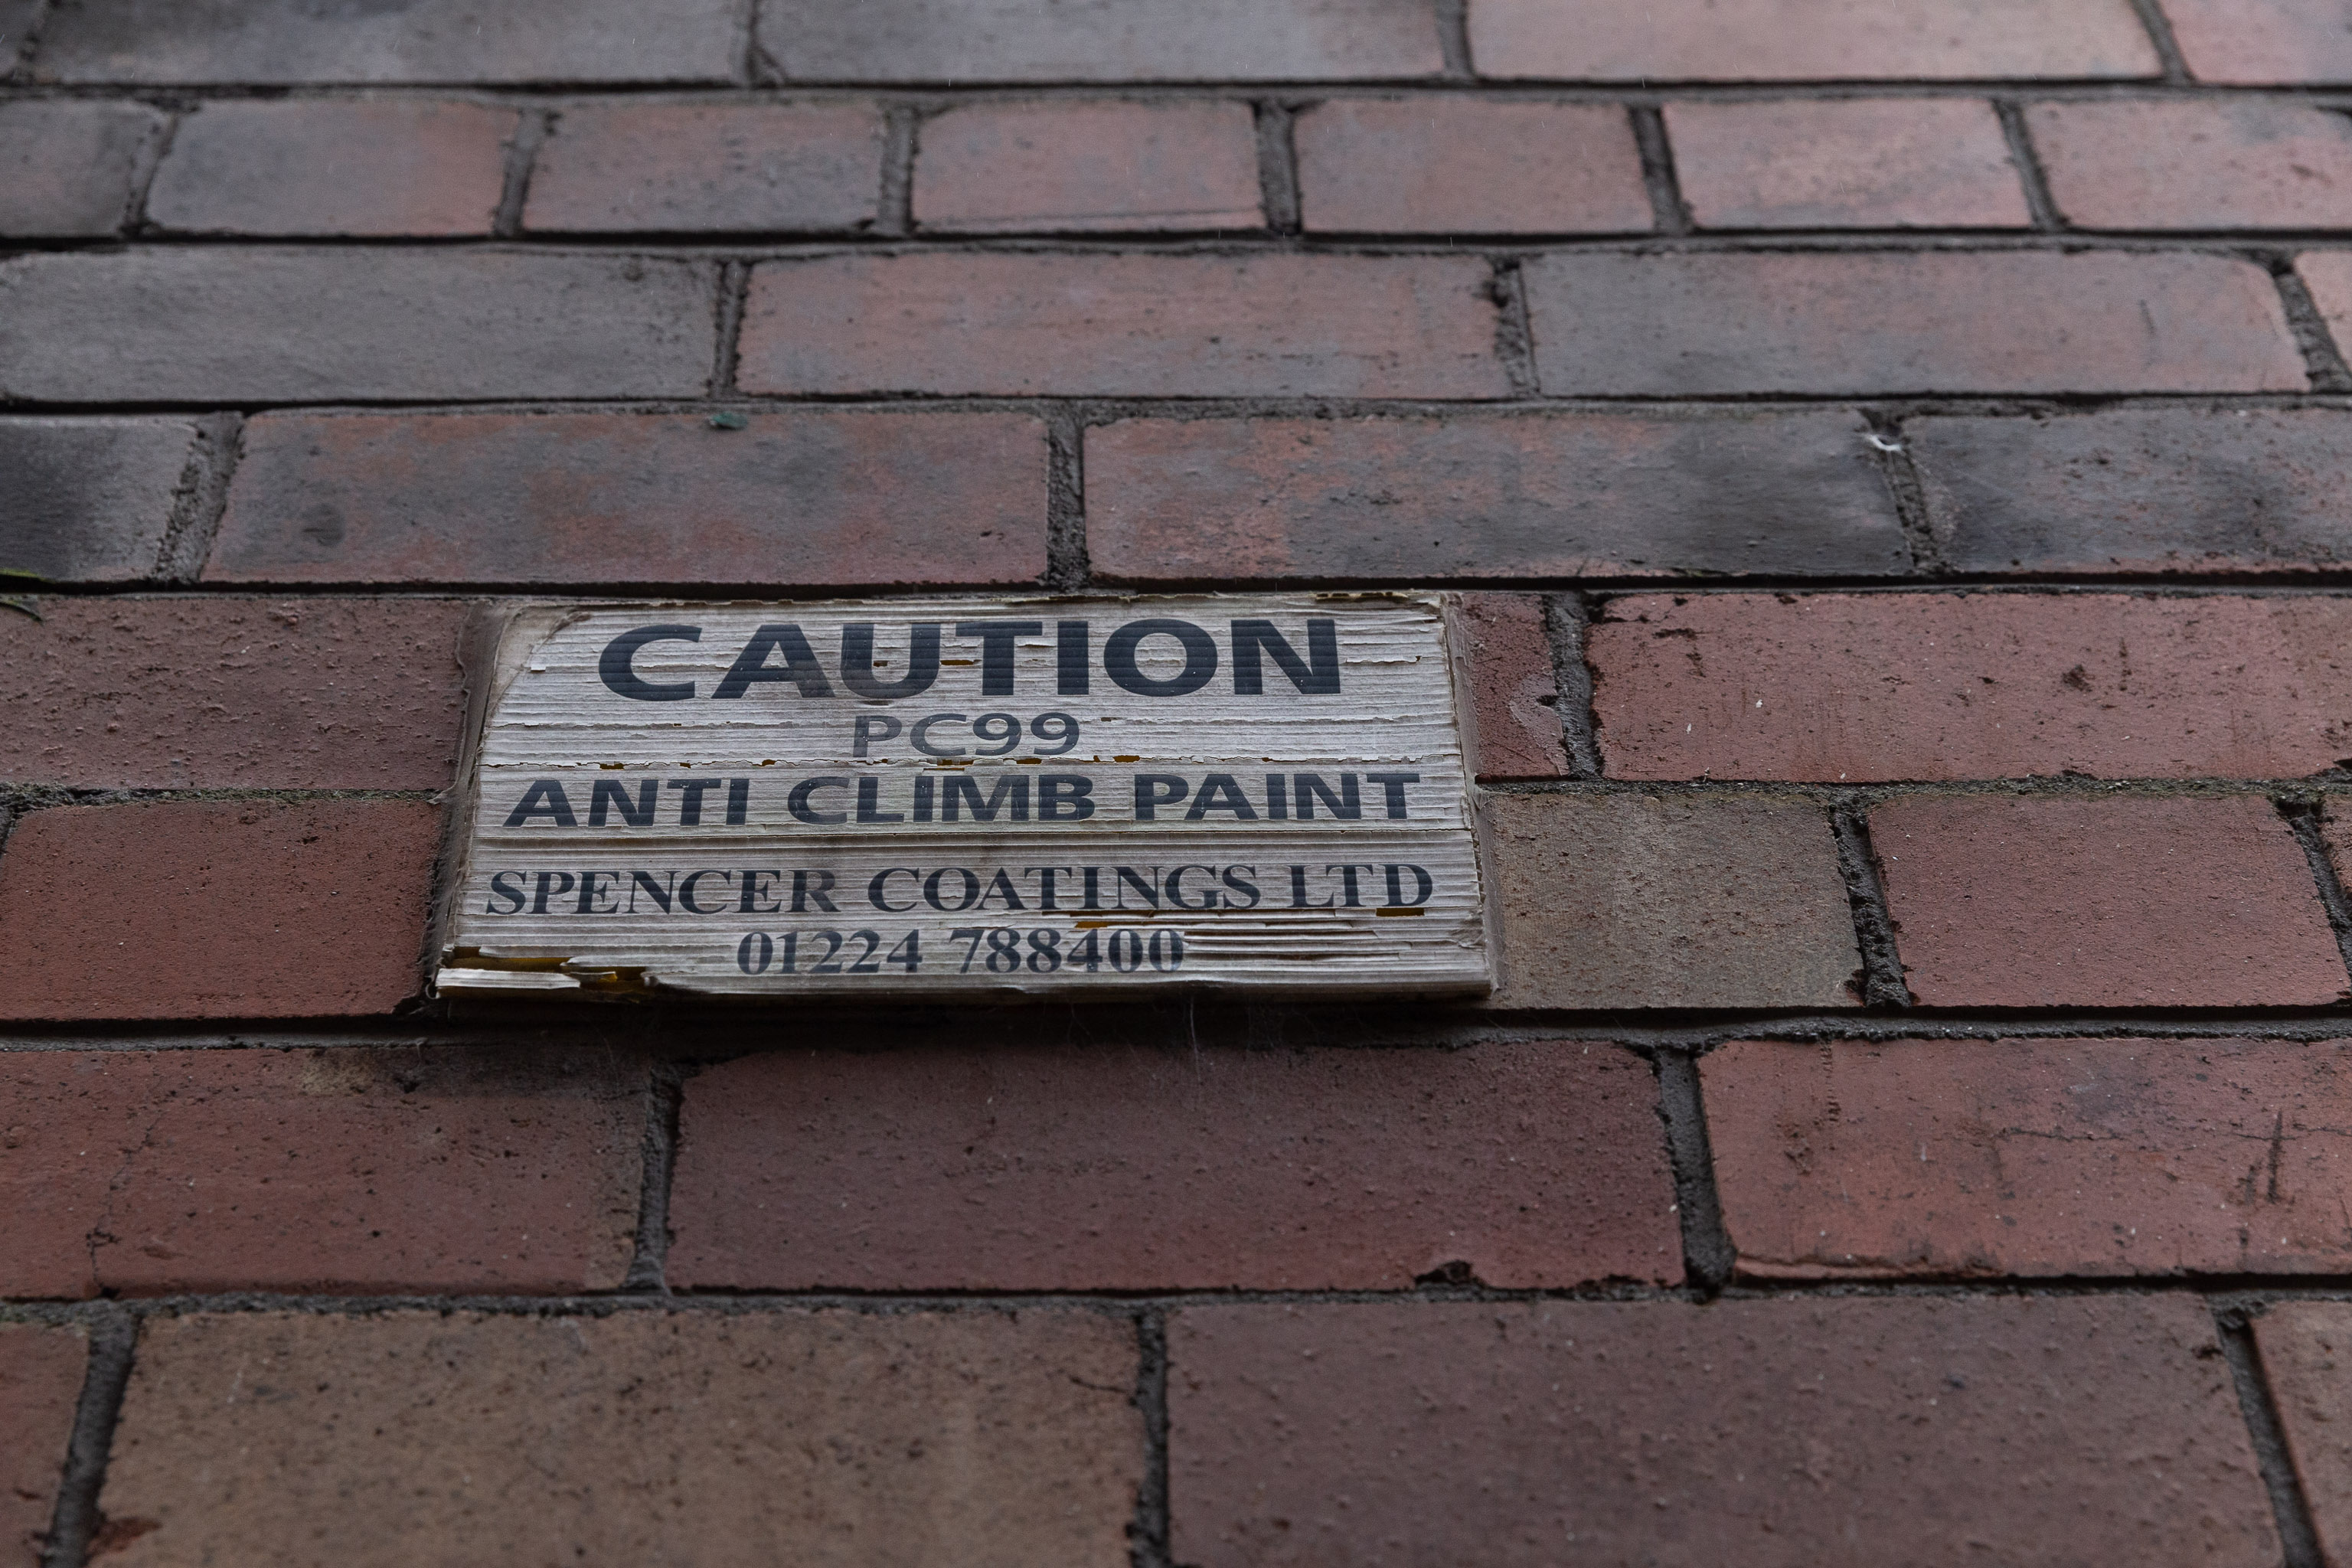 Anti Climb Paint
